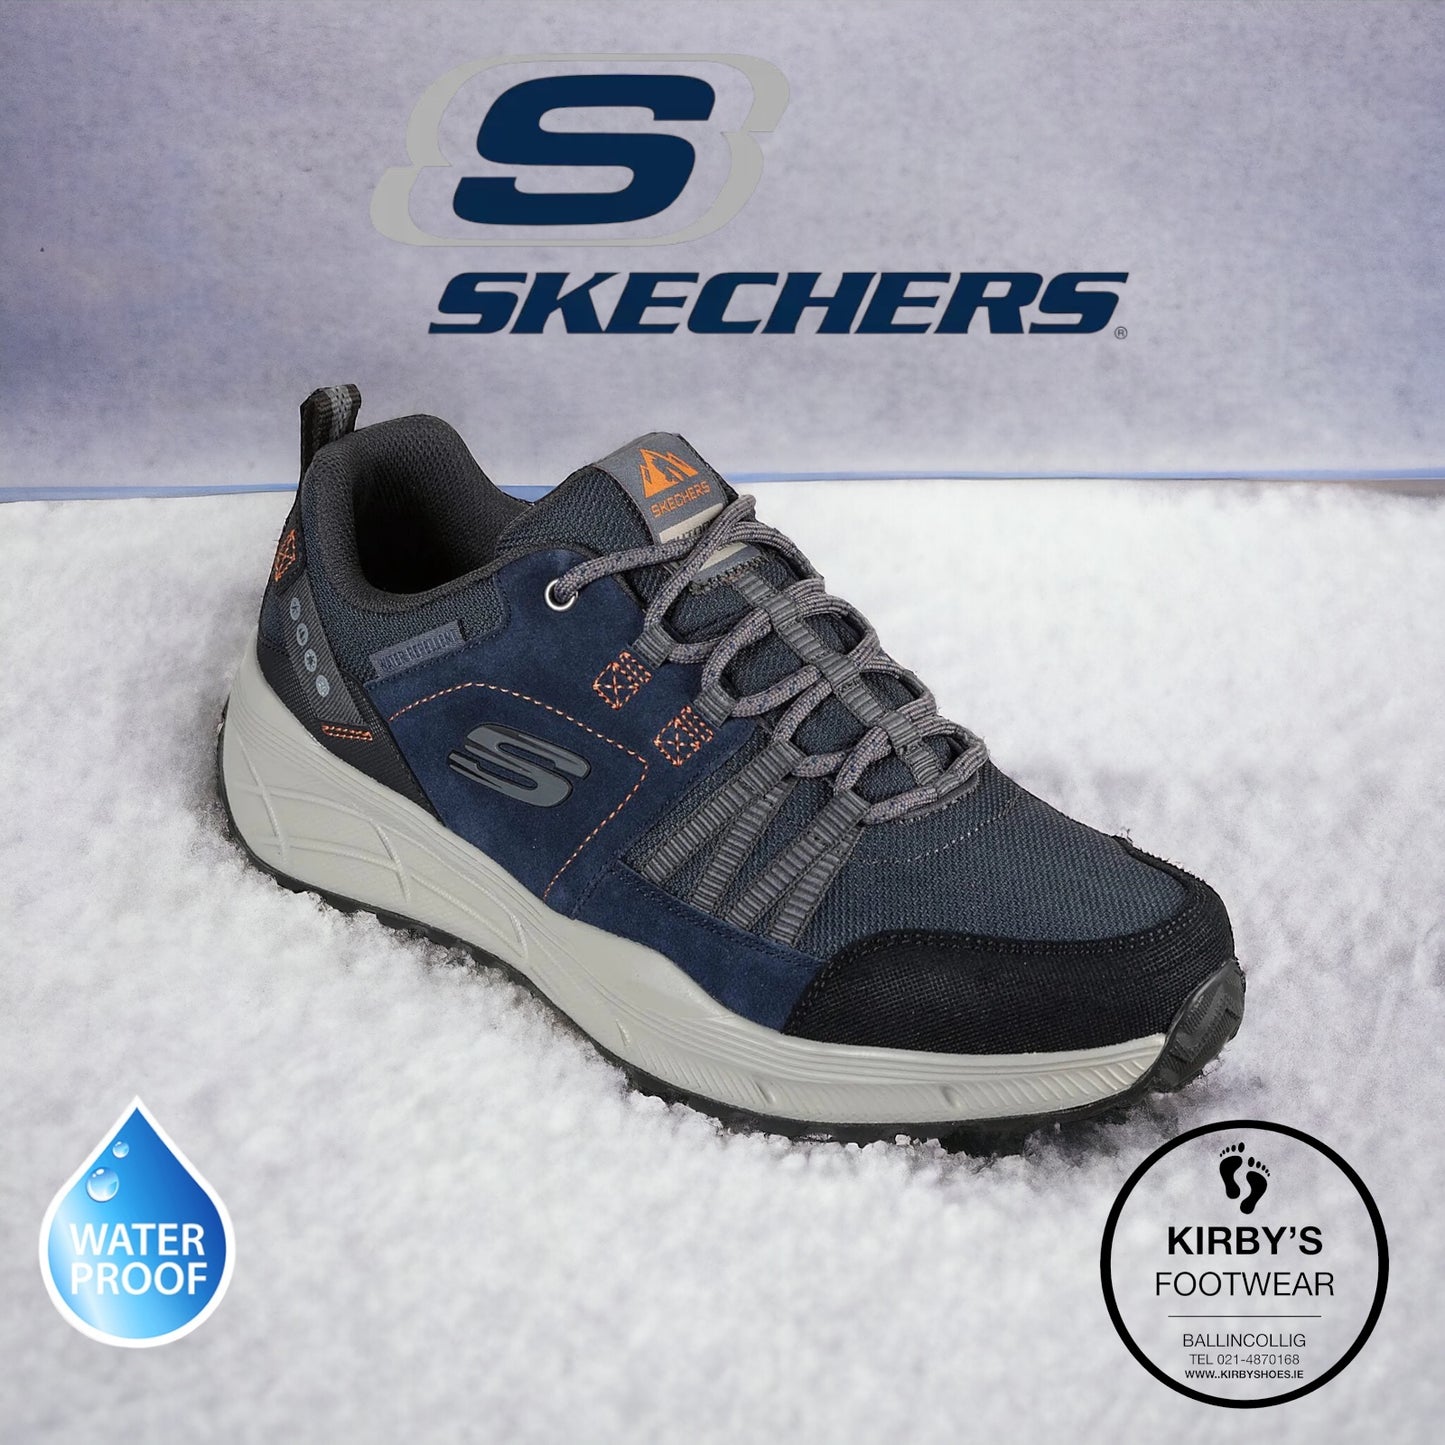 Skechers Equalizer 4.0 trail navy waterproof